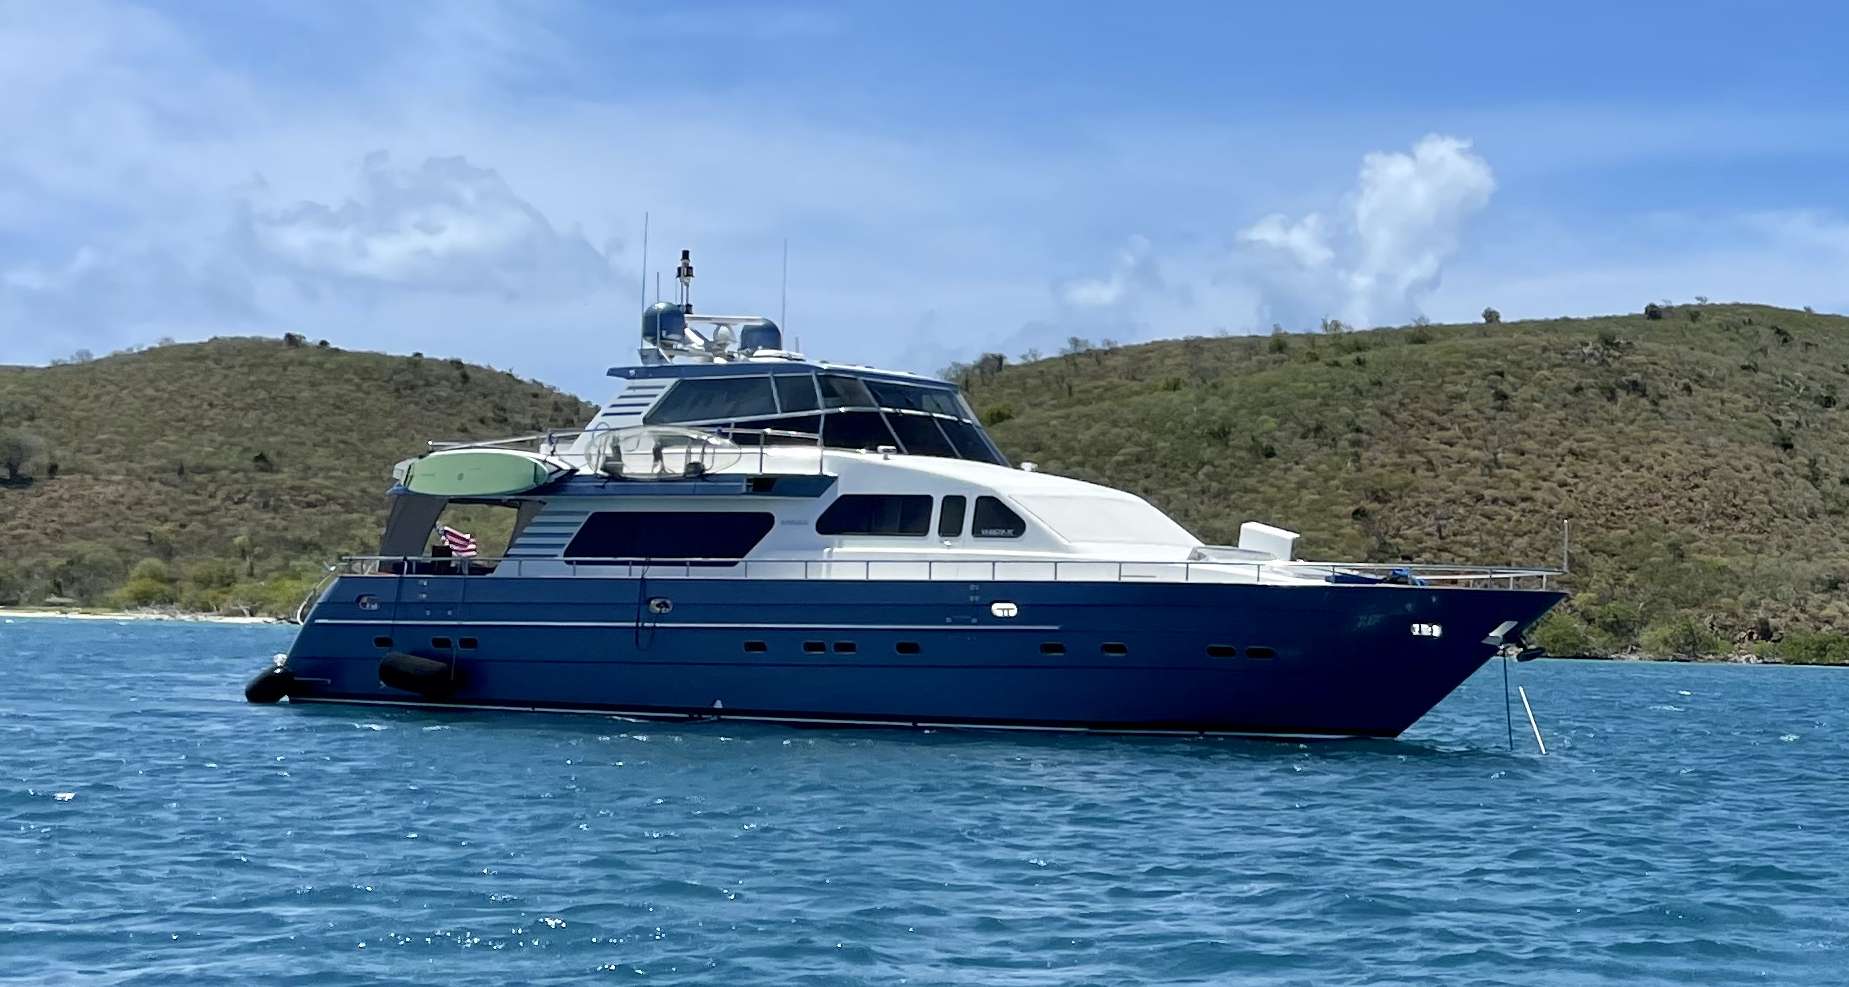 QARA - Motor Boat Charter British Virgin Islands & Boat hire in Caribbean 1